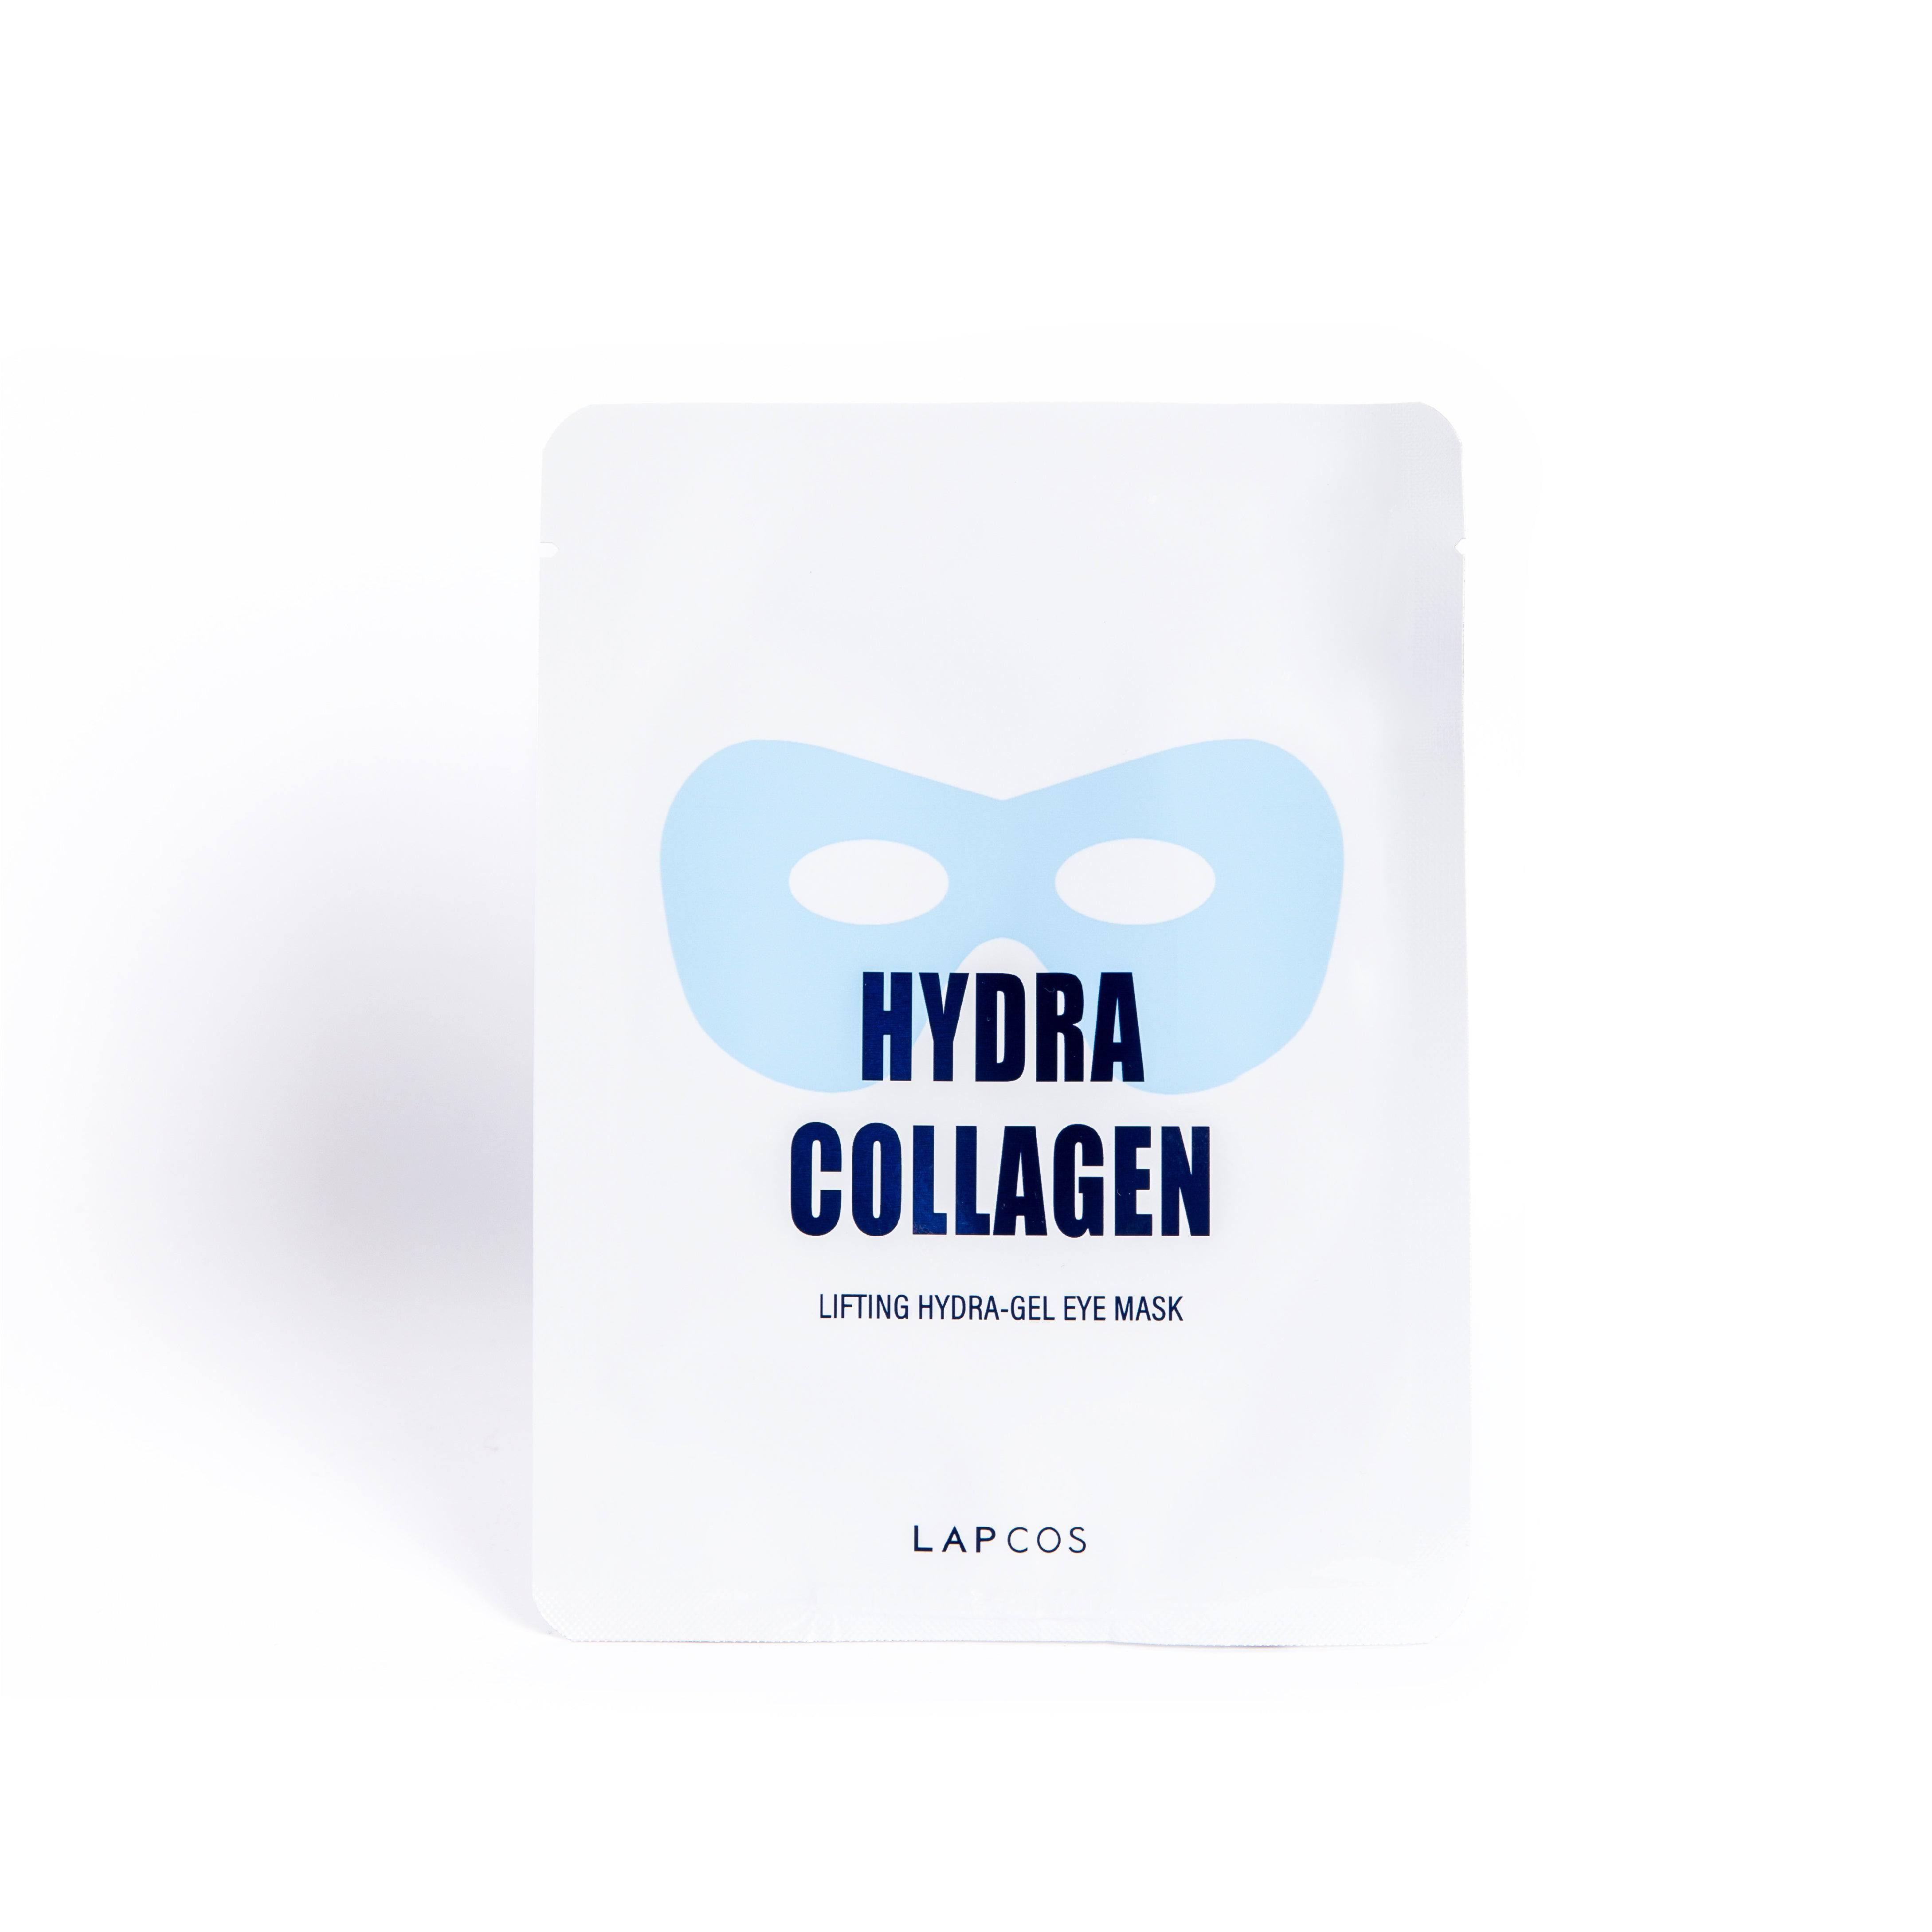 LAP Hydra collagen eye mask